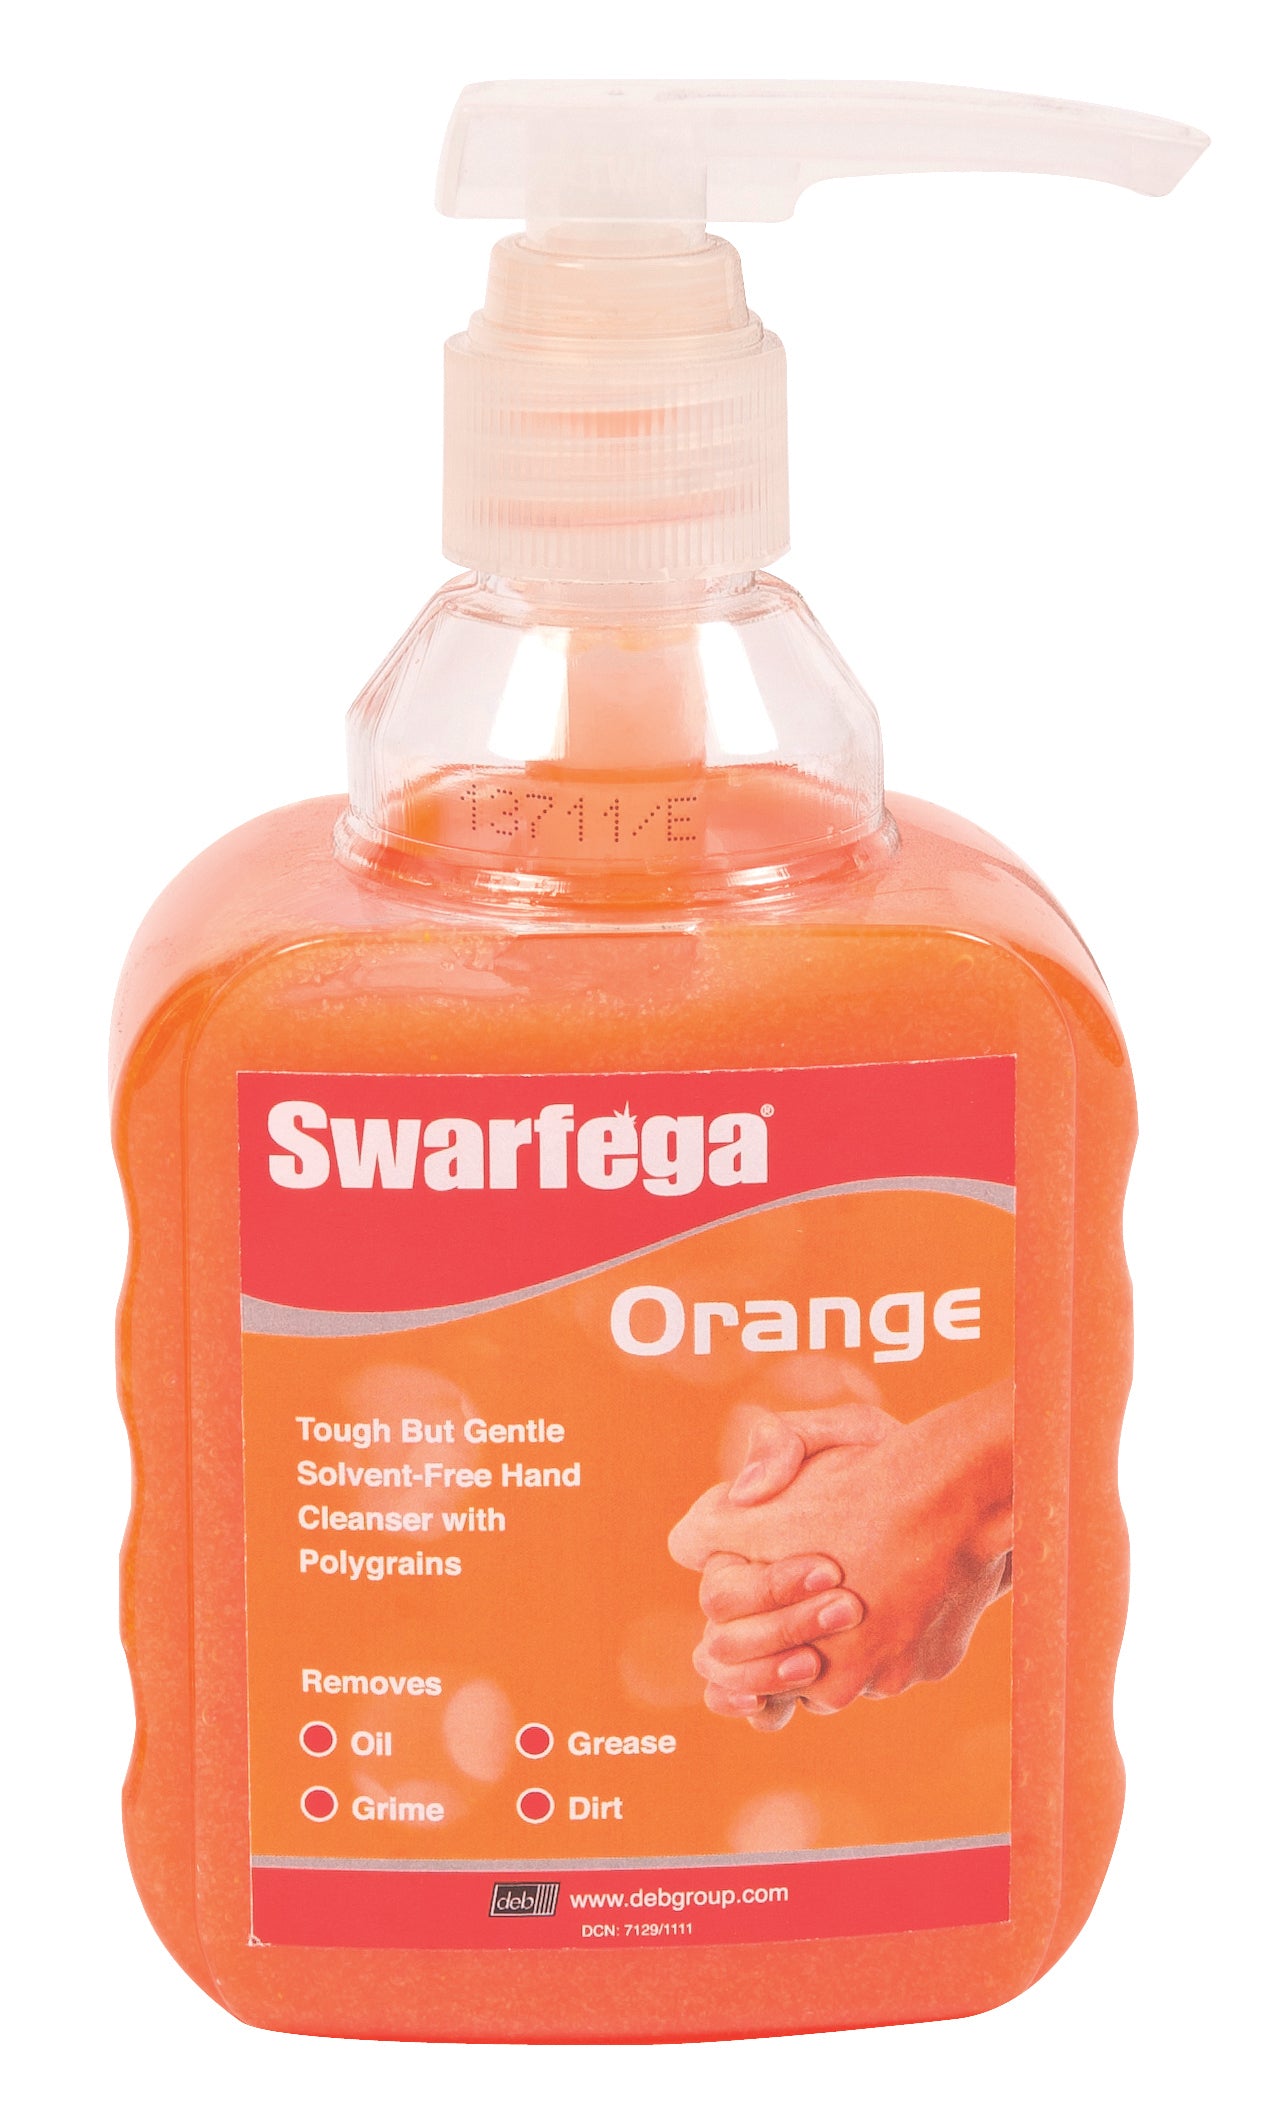 Swarfega Orange Pump Bottle 450ml